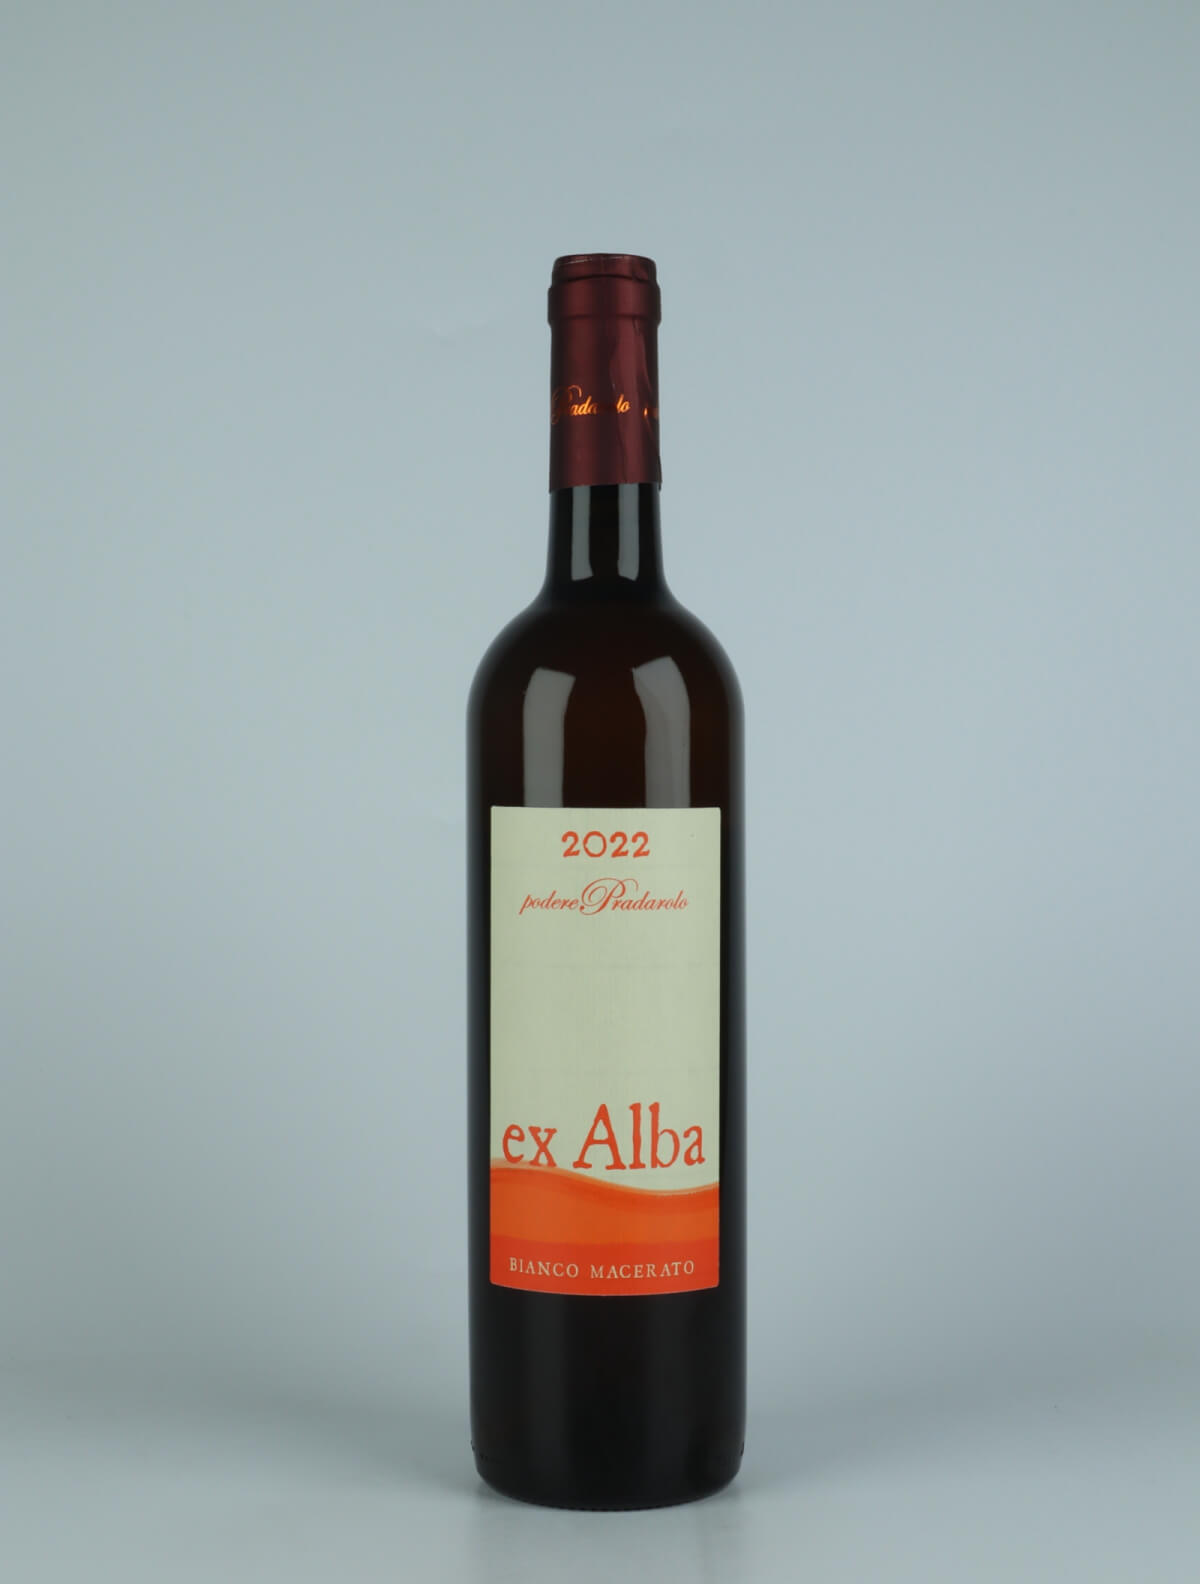 A bottle 2022 Ex Alba Orange wine from Podere Pradarolo, Emilia-Romagna in Italy